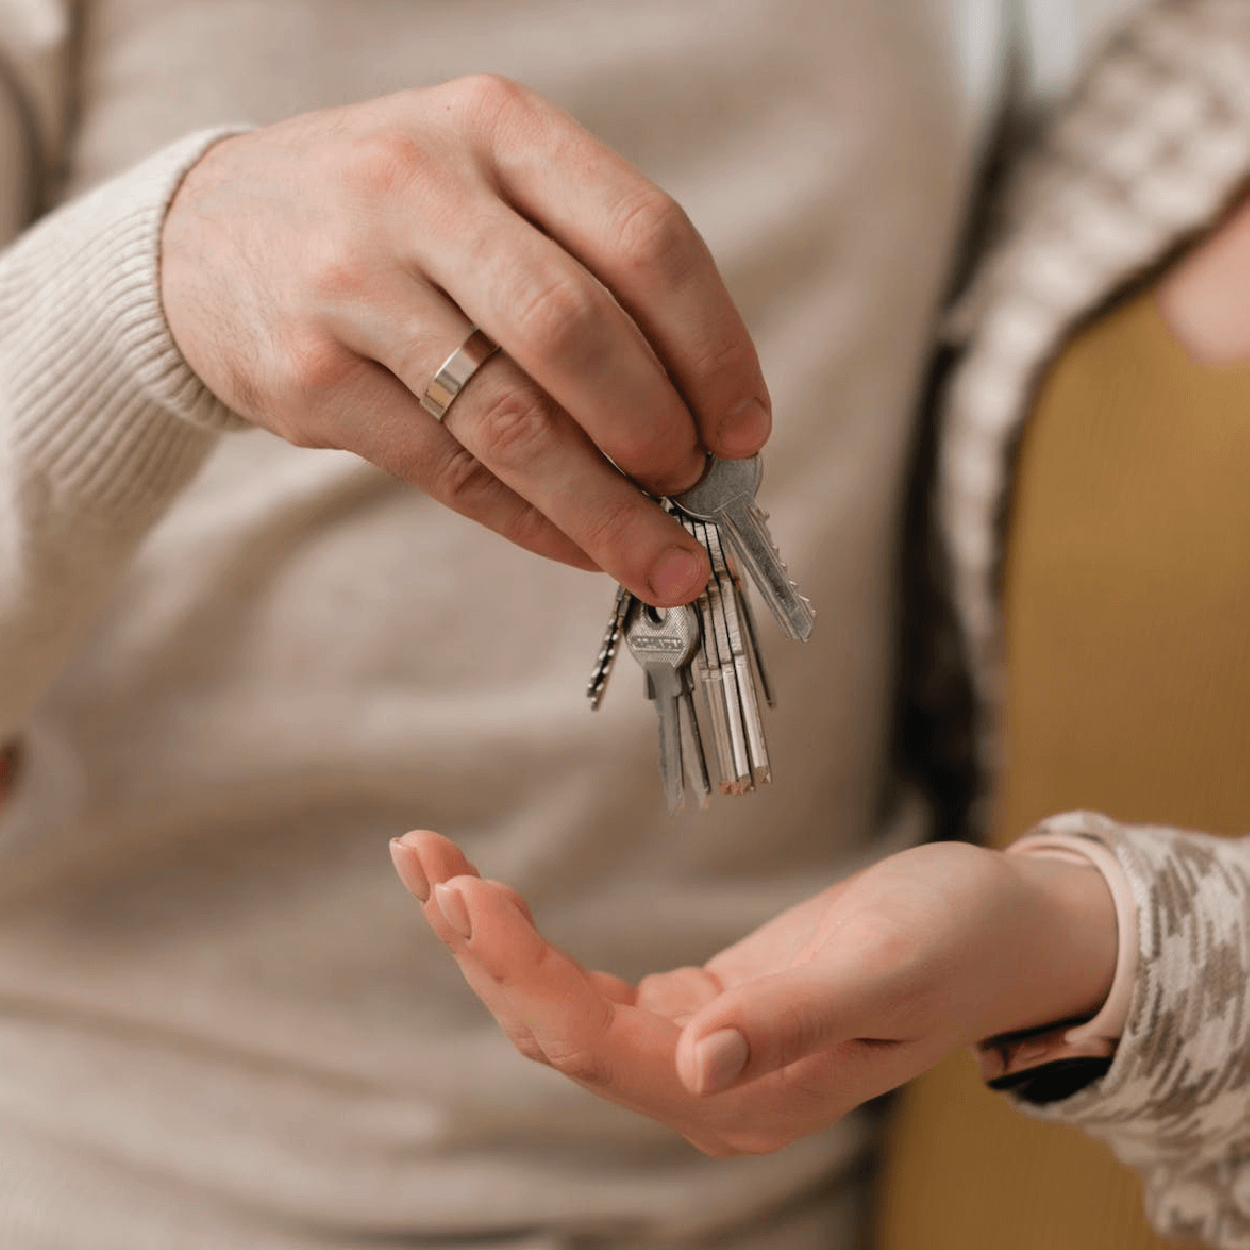 Transferring of house keys between two hands